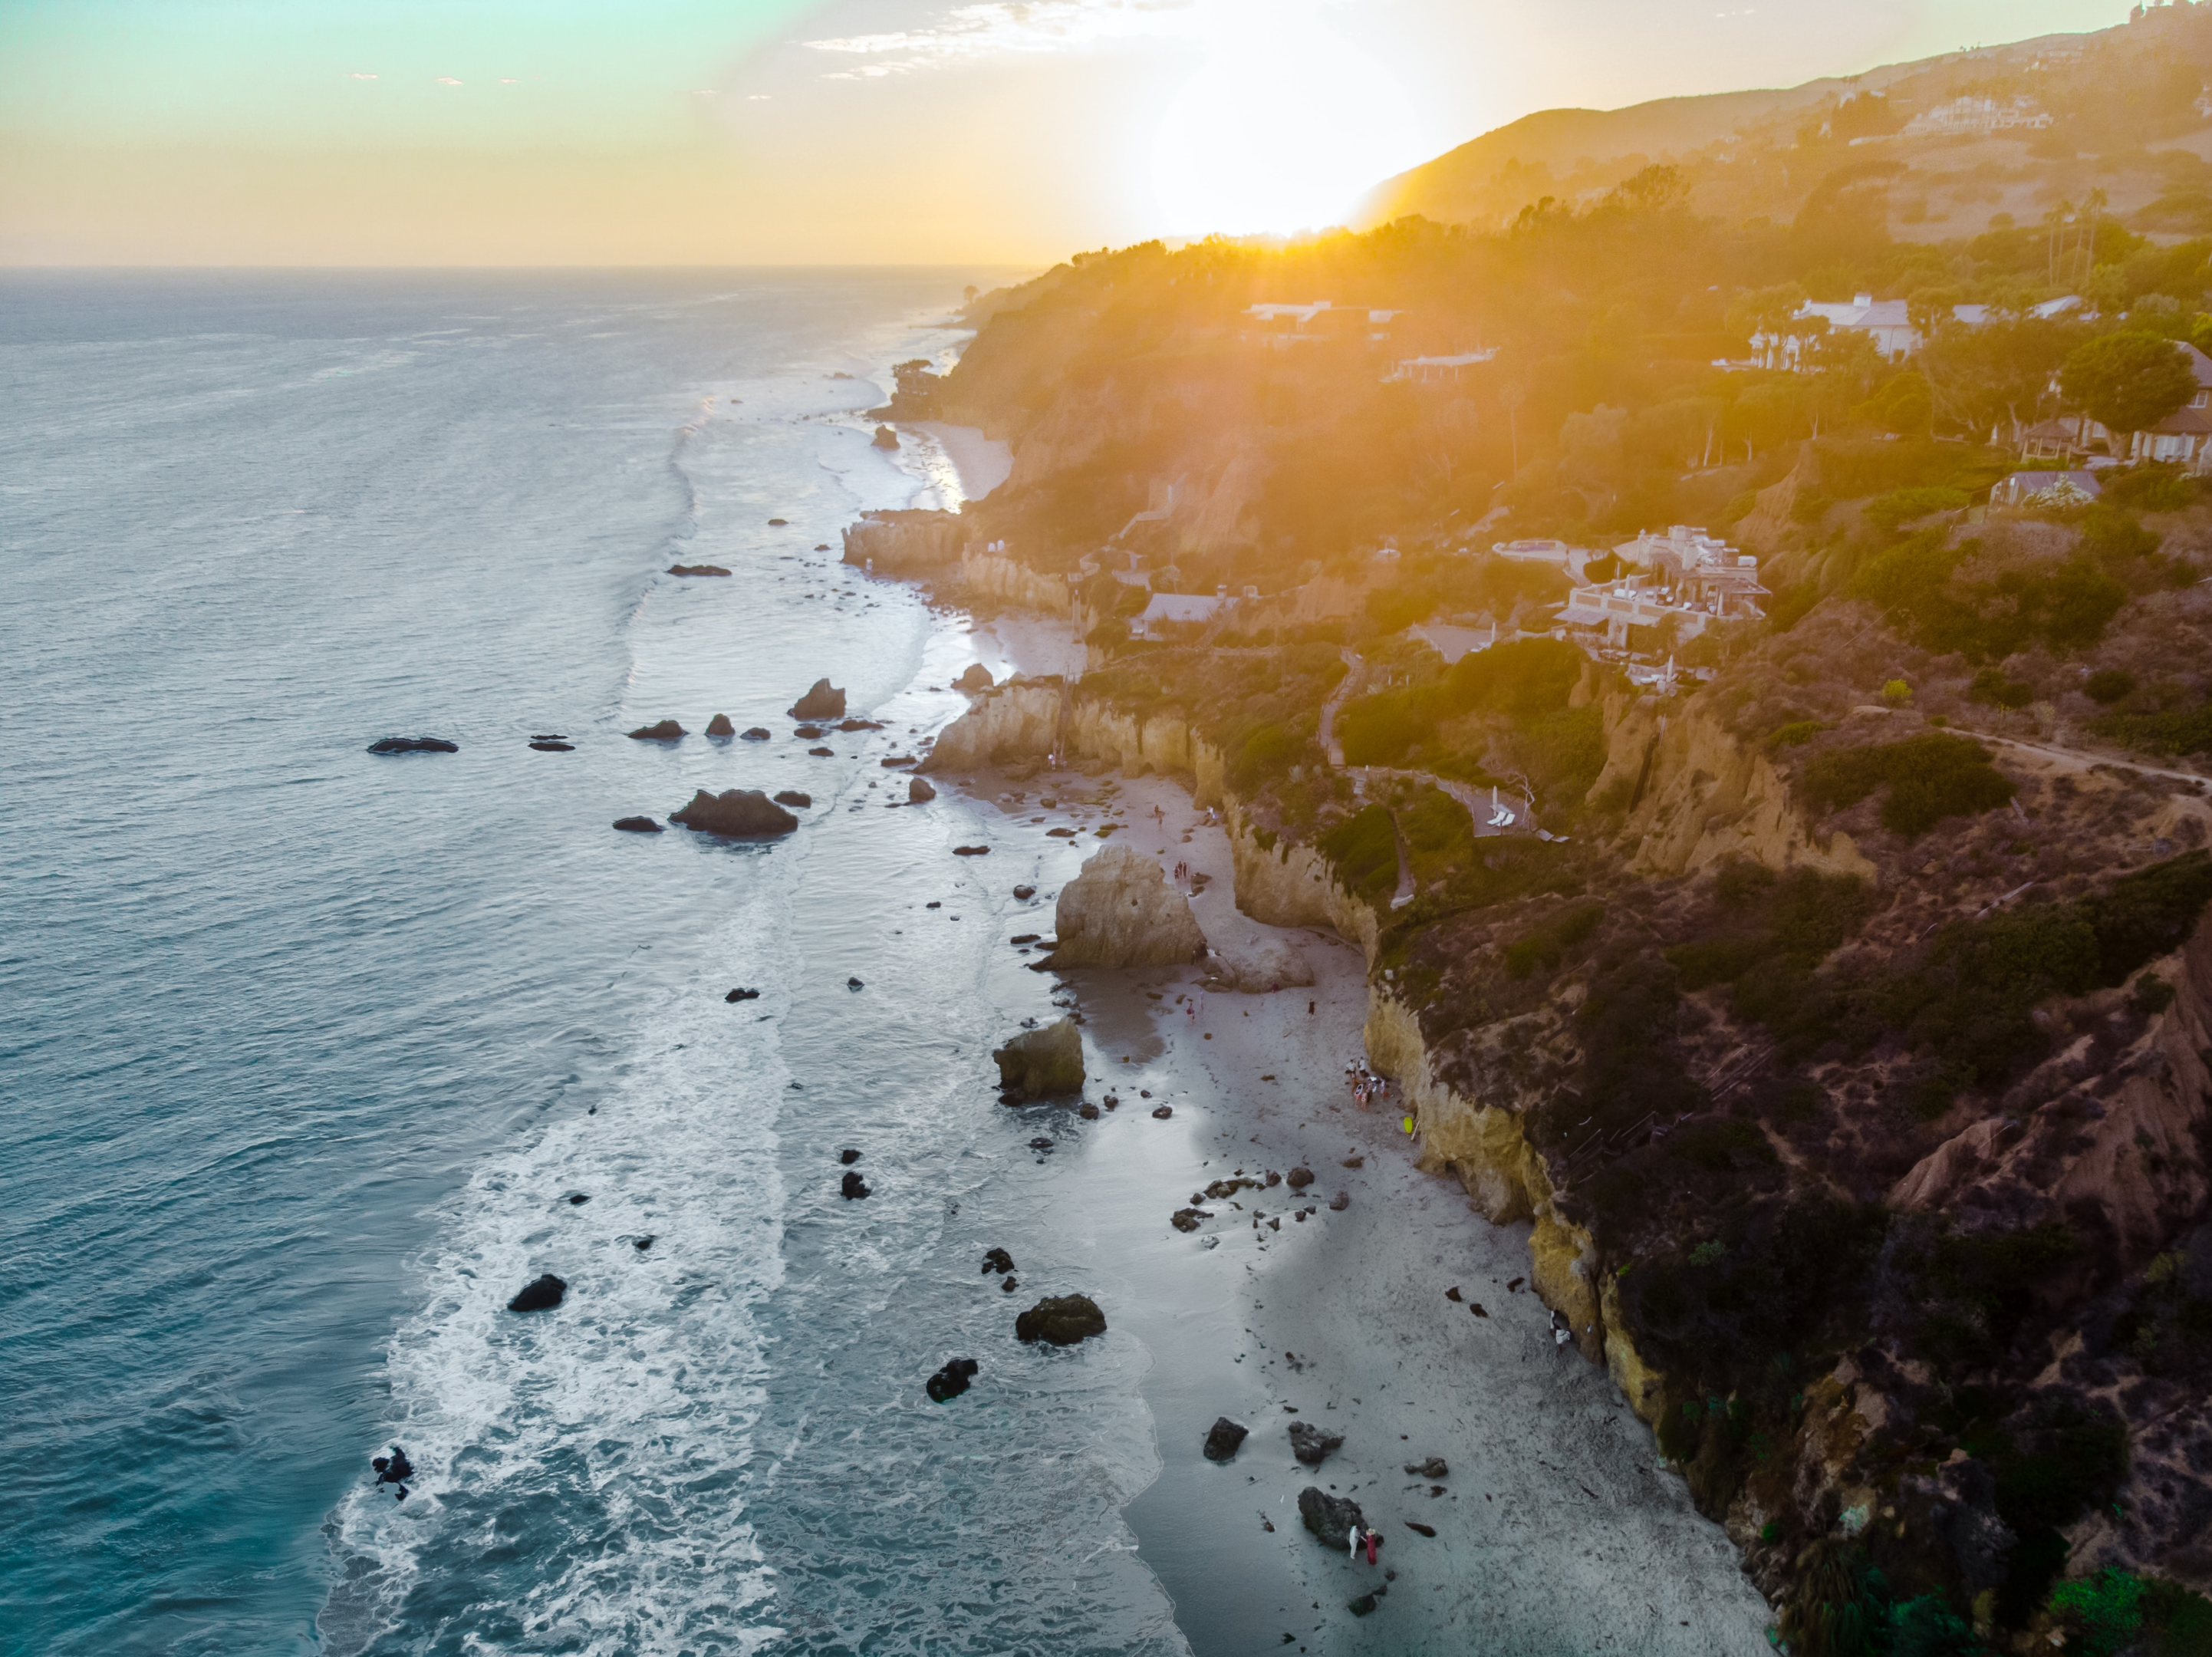 Golden hour moment at El Matador Beach in Malibu, CA. Photo by Brendan Stephens